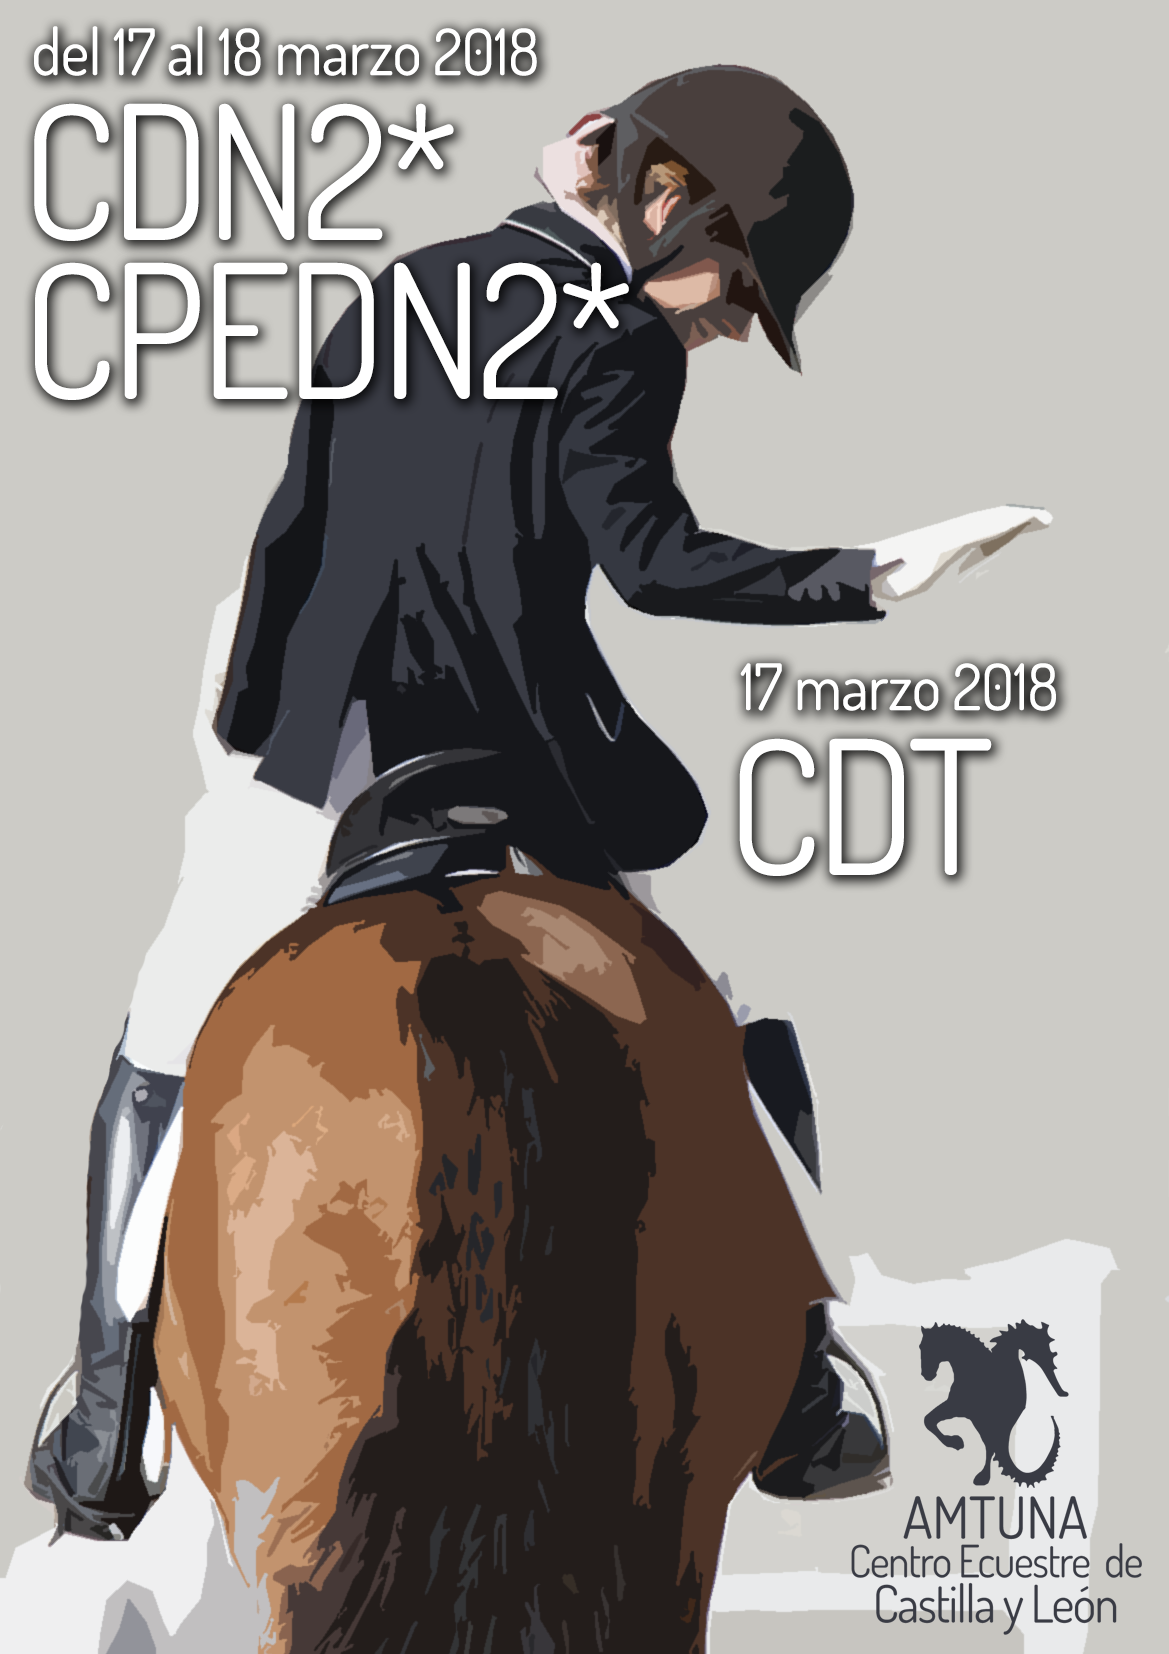 CDN2* & CPEDN2* & CDT | AMTUNA CECYL